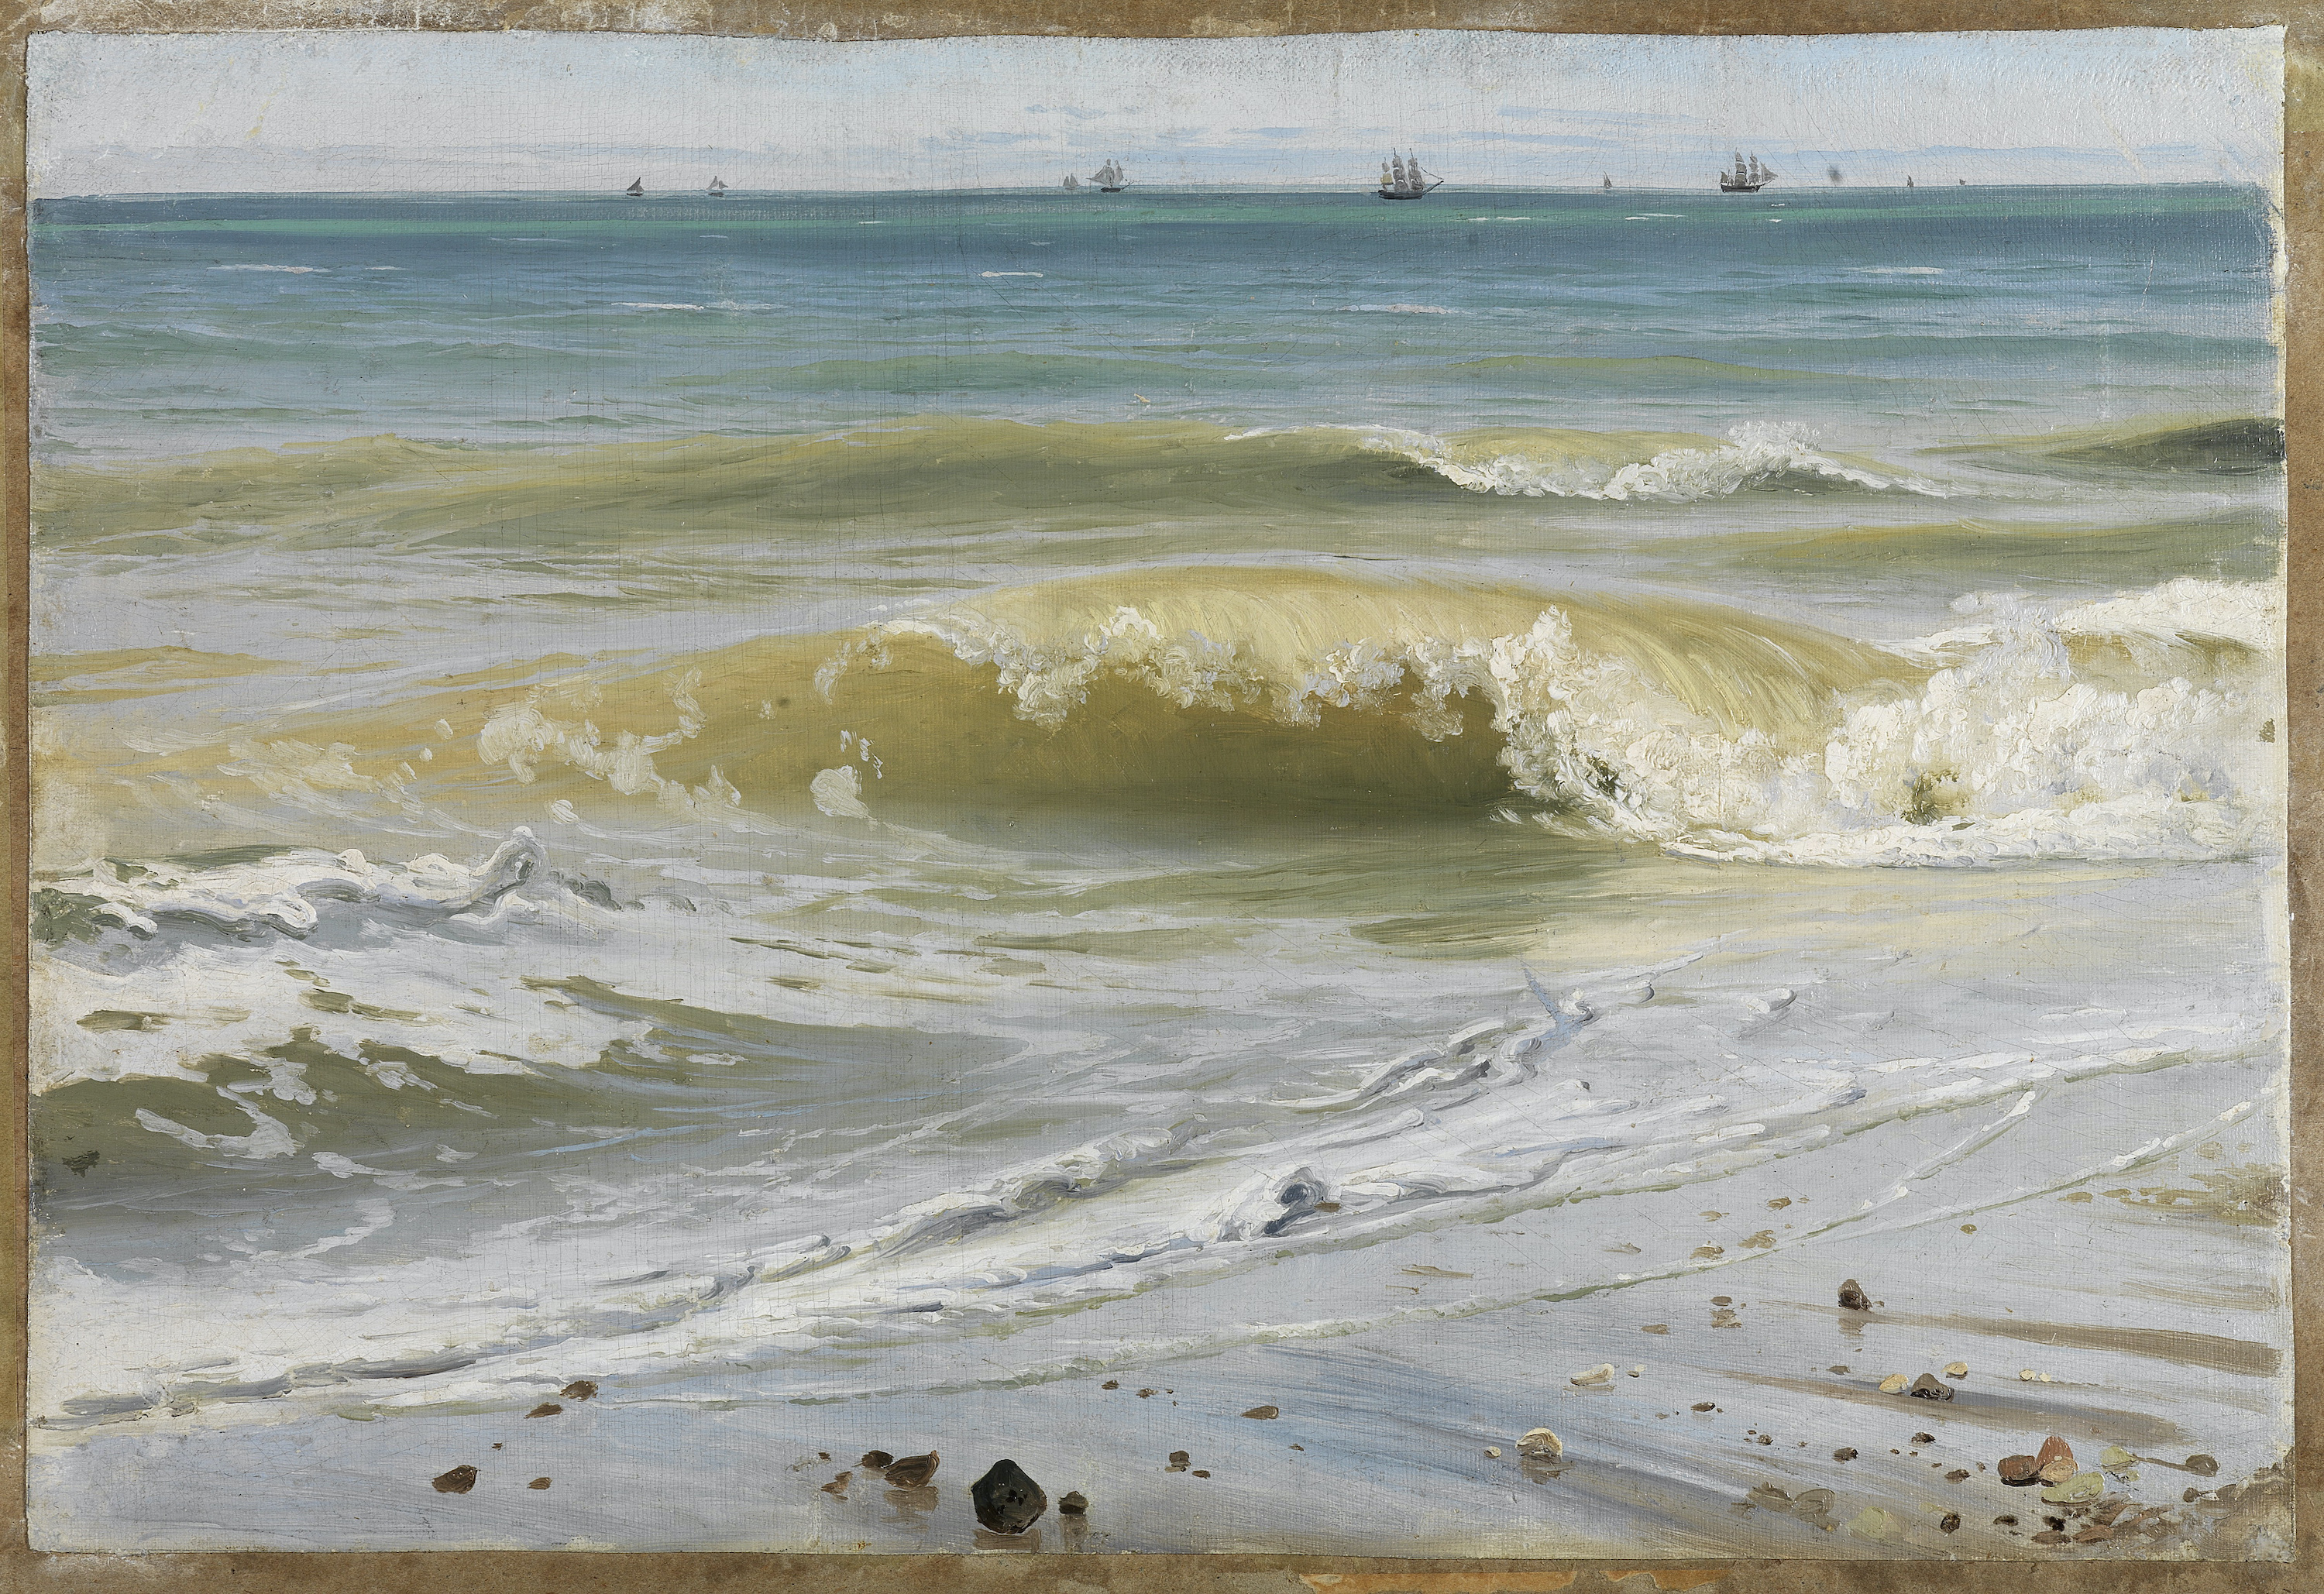 Breaking Waves with Distant Ships by Johann Wilhelm Schirmer - 1836 - 30,5 x 43,4 cm Staatliche Kunsthalle Karlsruhe